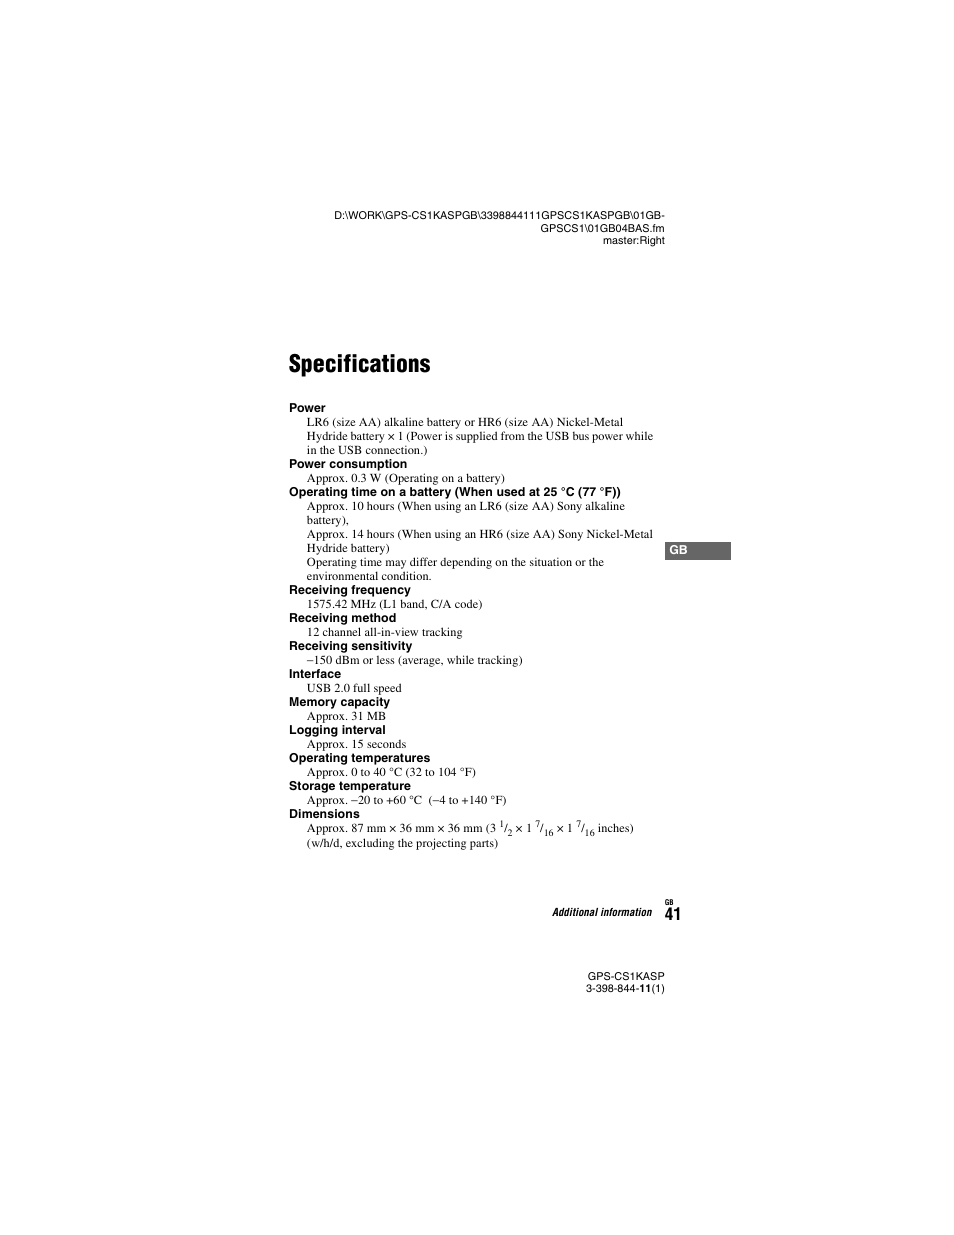 Specifications | Sony GPS-CS1KASP Manuel d'utilisation | Page 41 / 91